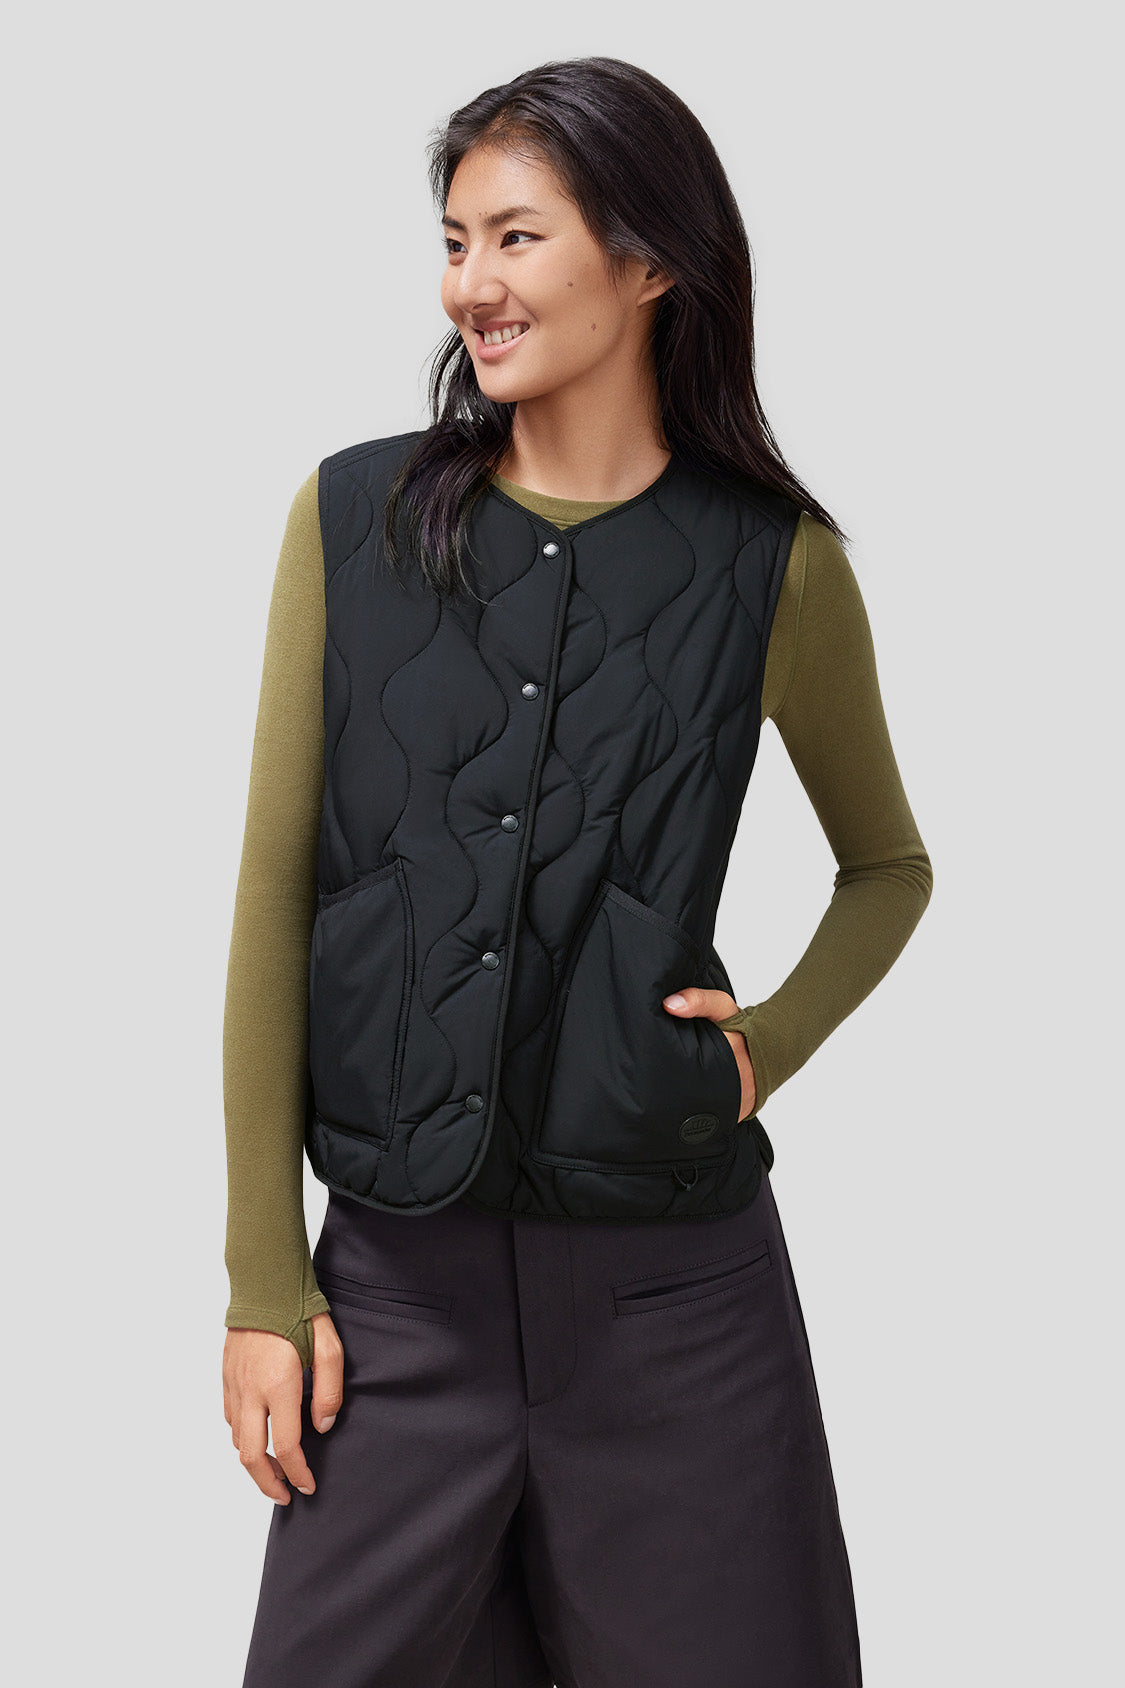 Shop Women Inner Woolblend HS Vest Type Thermal dark grey at Woollen Wear